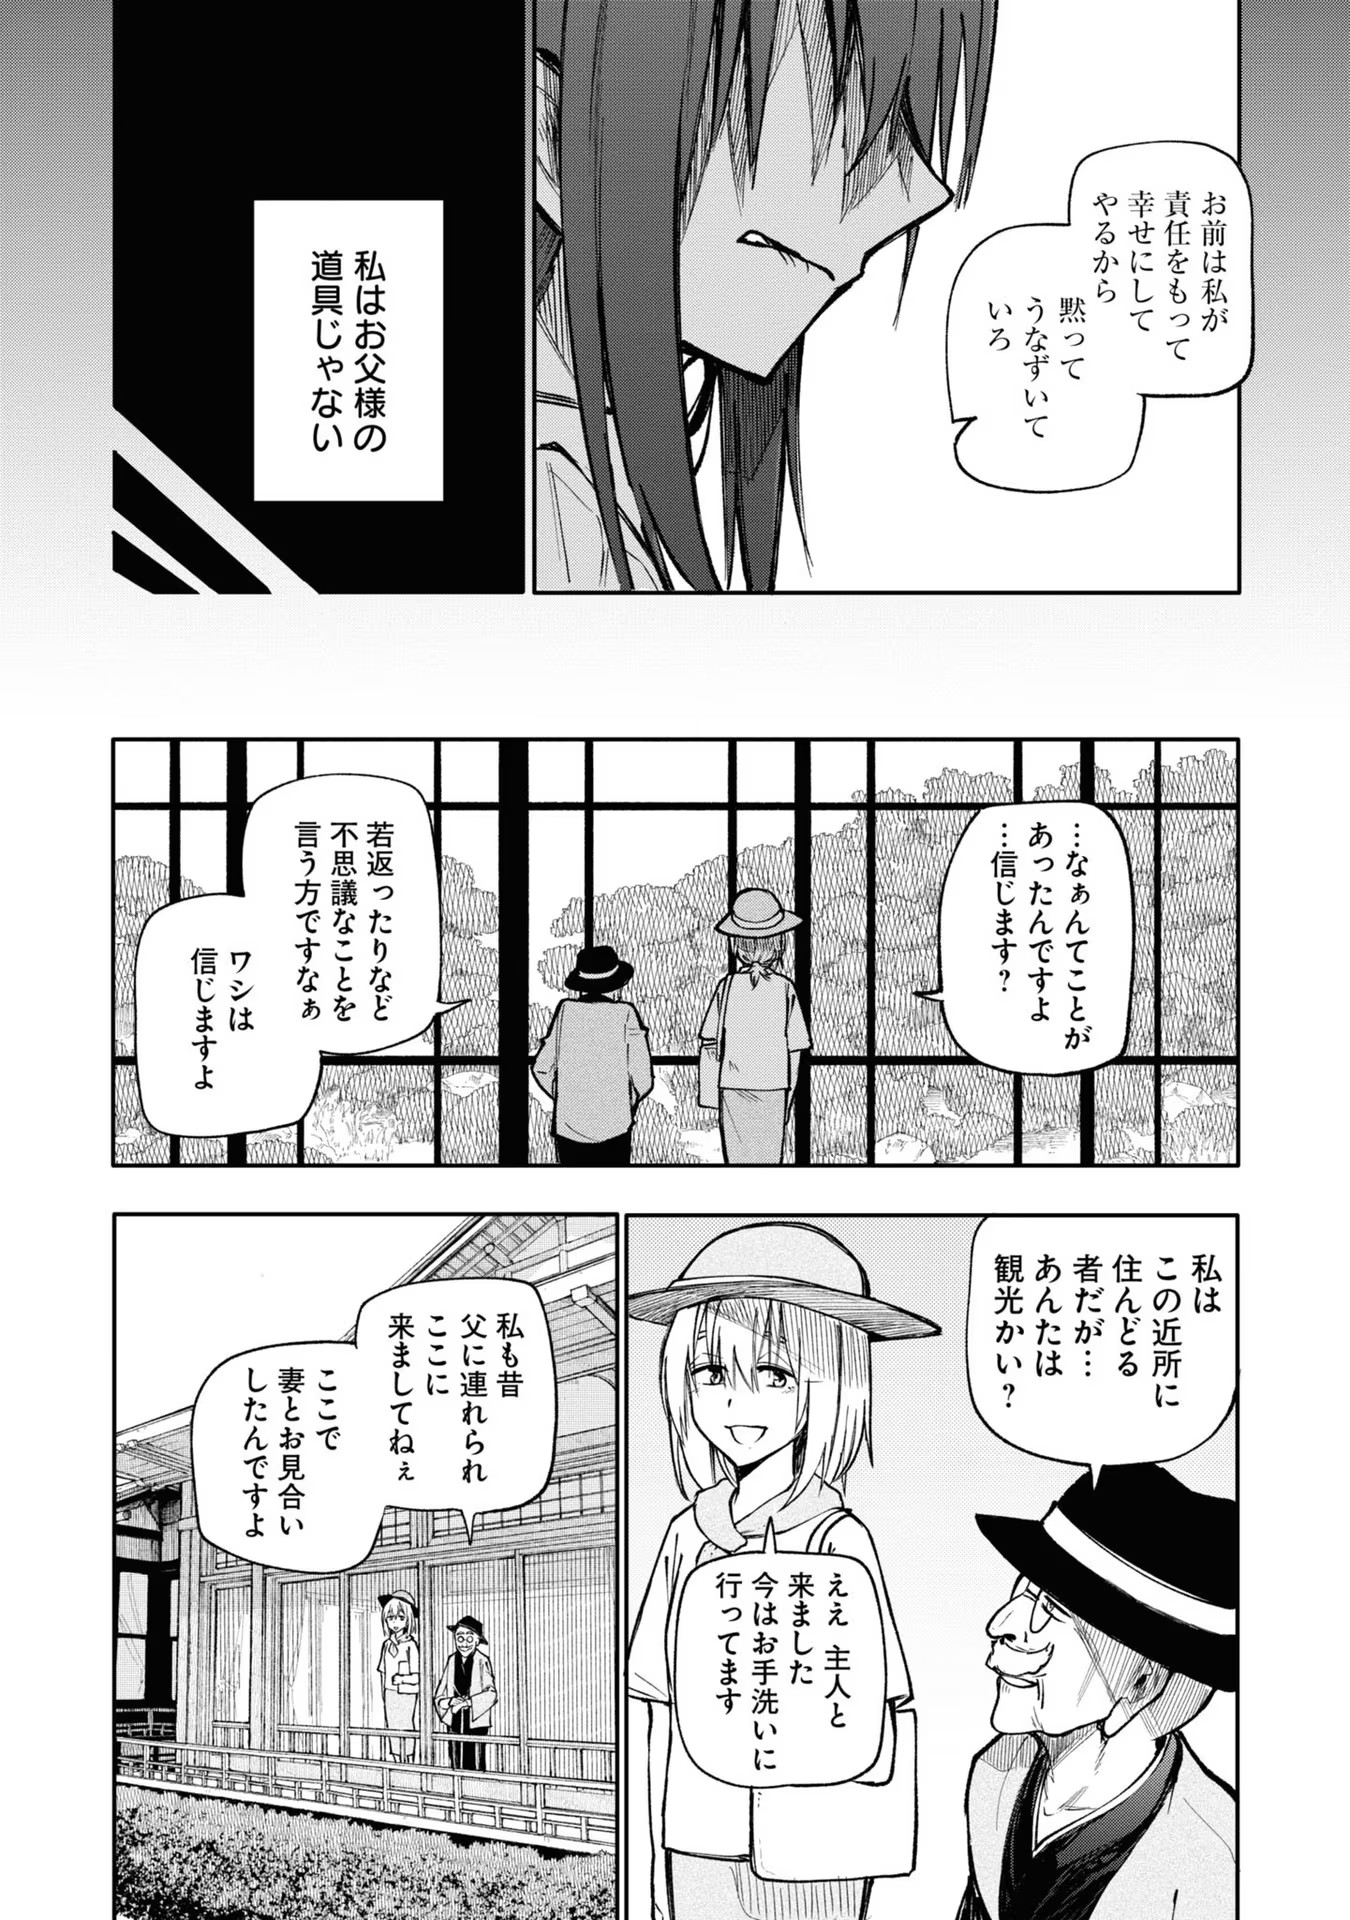 Ojii-san to Obaa-san ga Wakigaetta Hanashi - Chapter 117 - Page 2